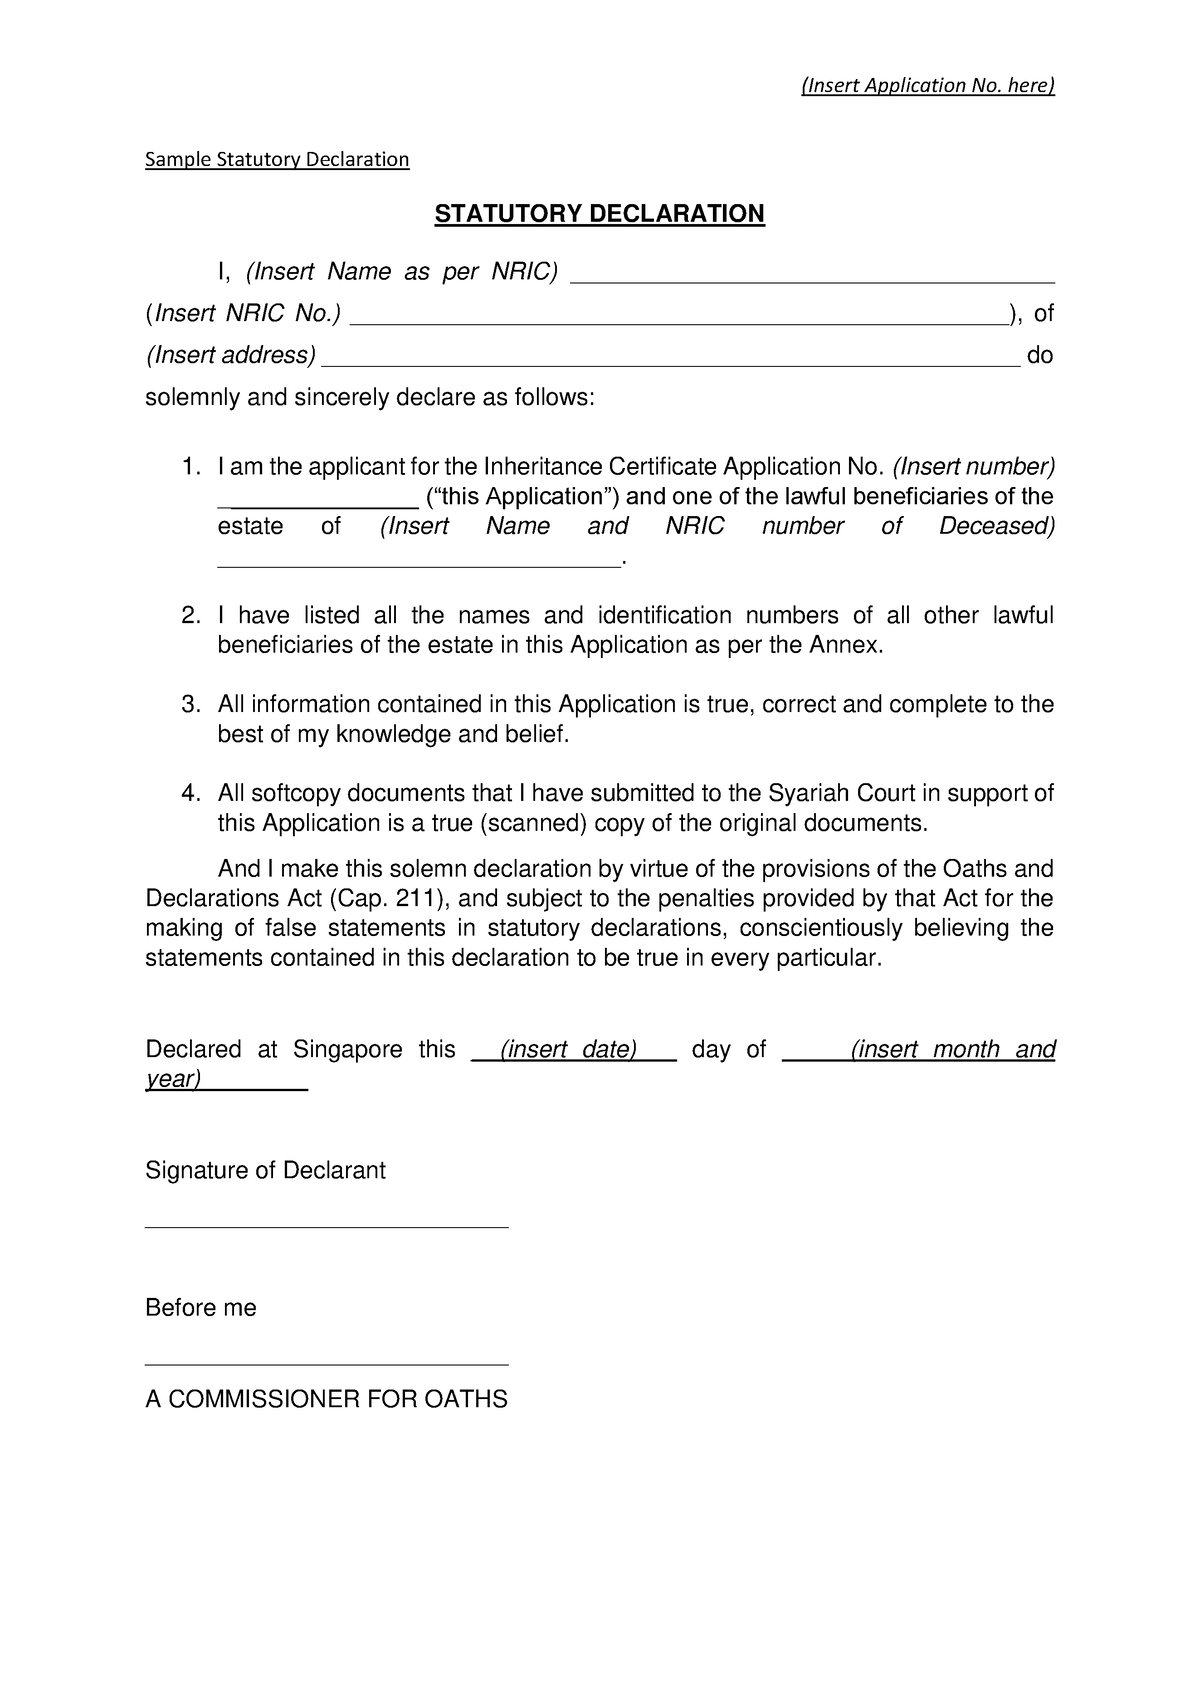 Sample Statutory Declaration Form Malaysia Kartika Pr 4971